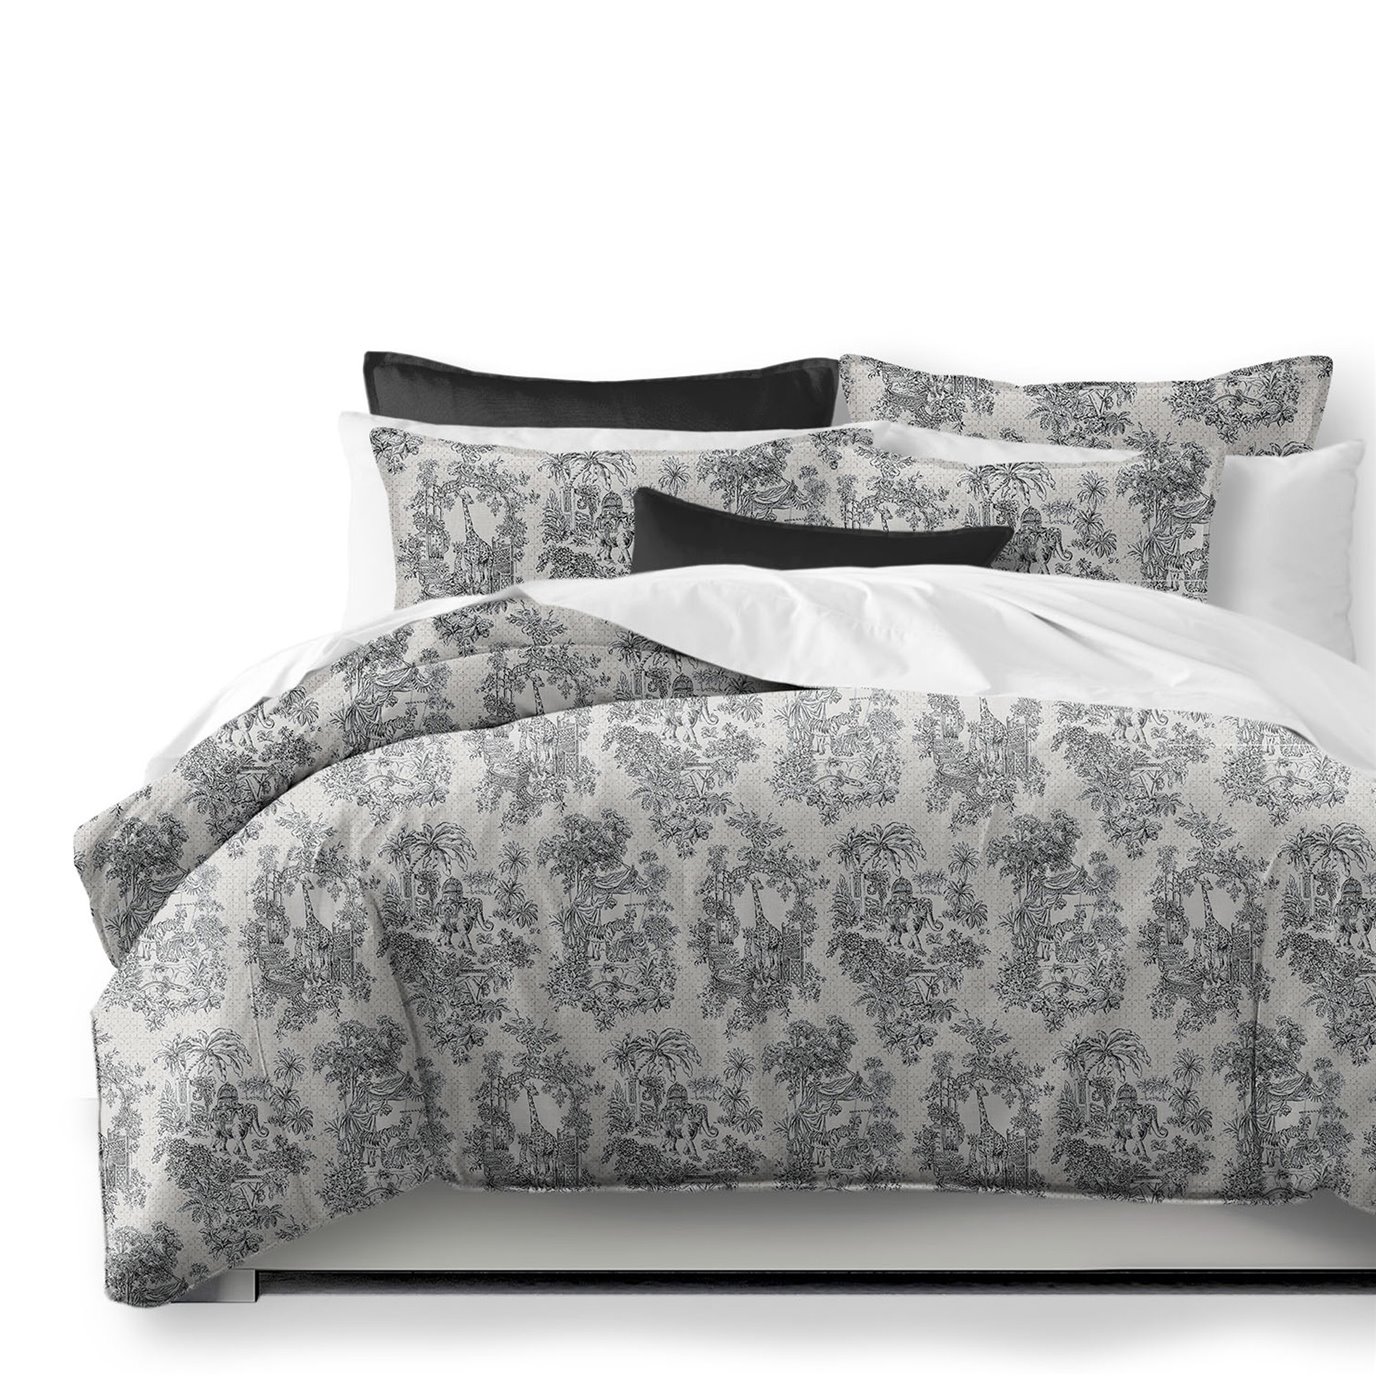 Kaelan Black Comforter and Pillow Sham(s) Set - Size Queen